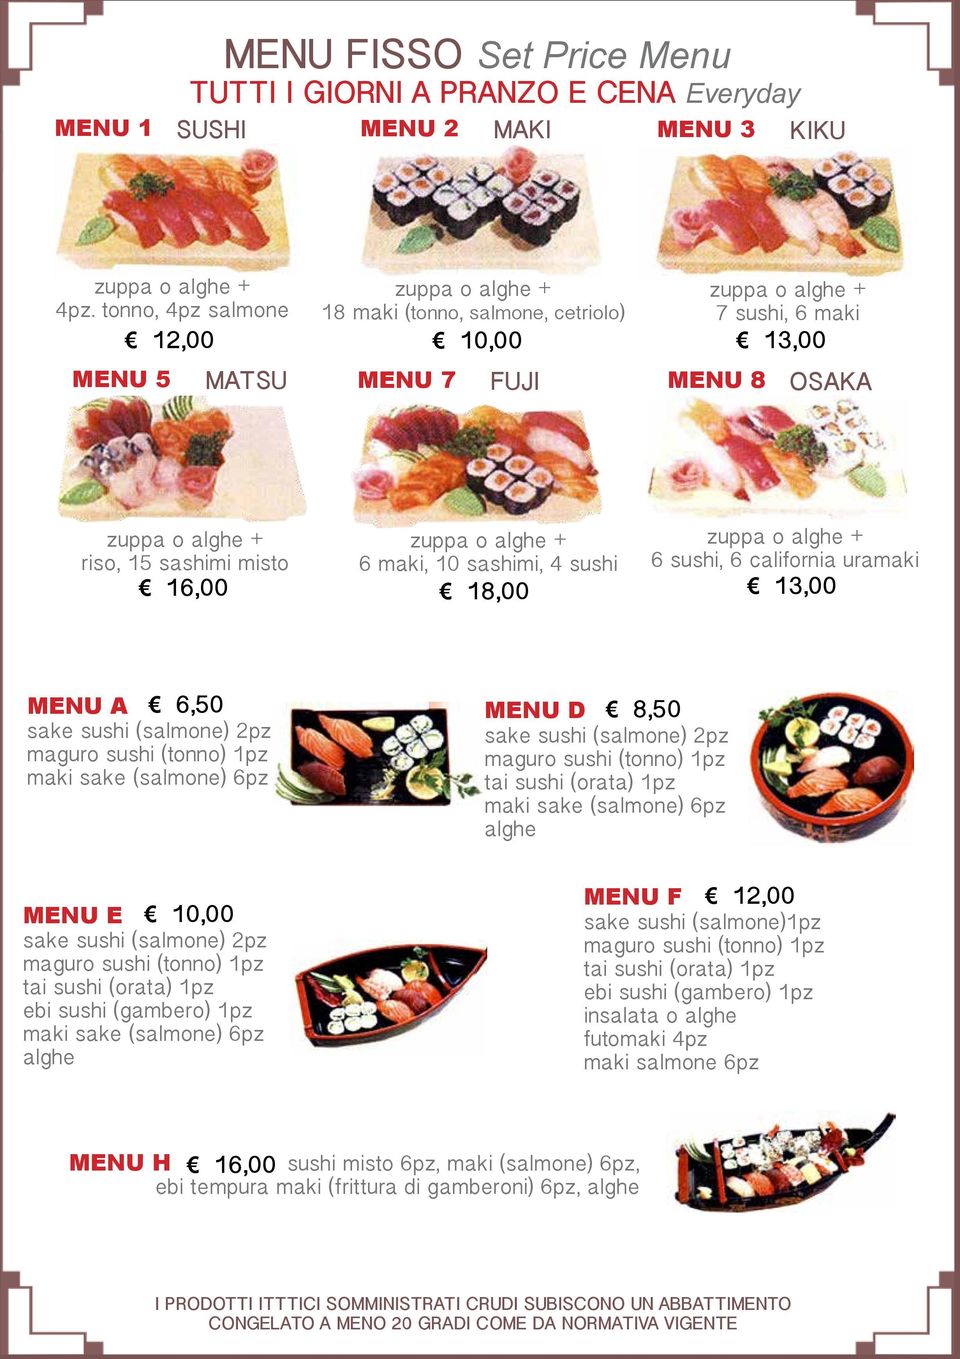 california uramaki 13,00 MENU A sake sushi (salmone) 2pz maguro sushi (tonno) 1pz maki sake (salmone) 6pz MENU D 8,50 sake sushi (salmone) 2pz maguro sushi (tonno) 1pz tai sushi (orata) 1pz maki sake